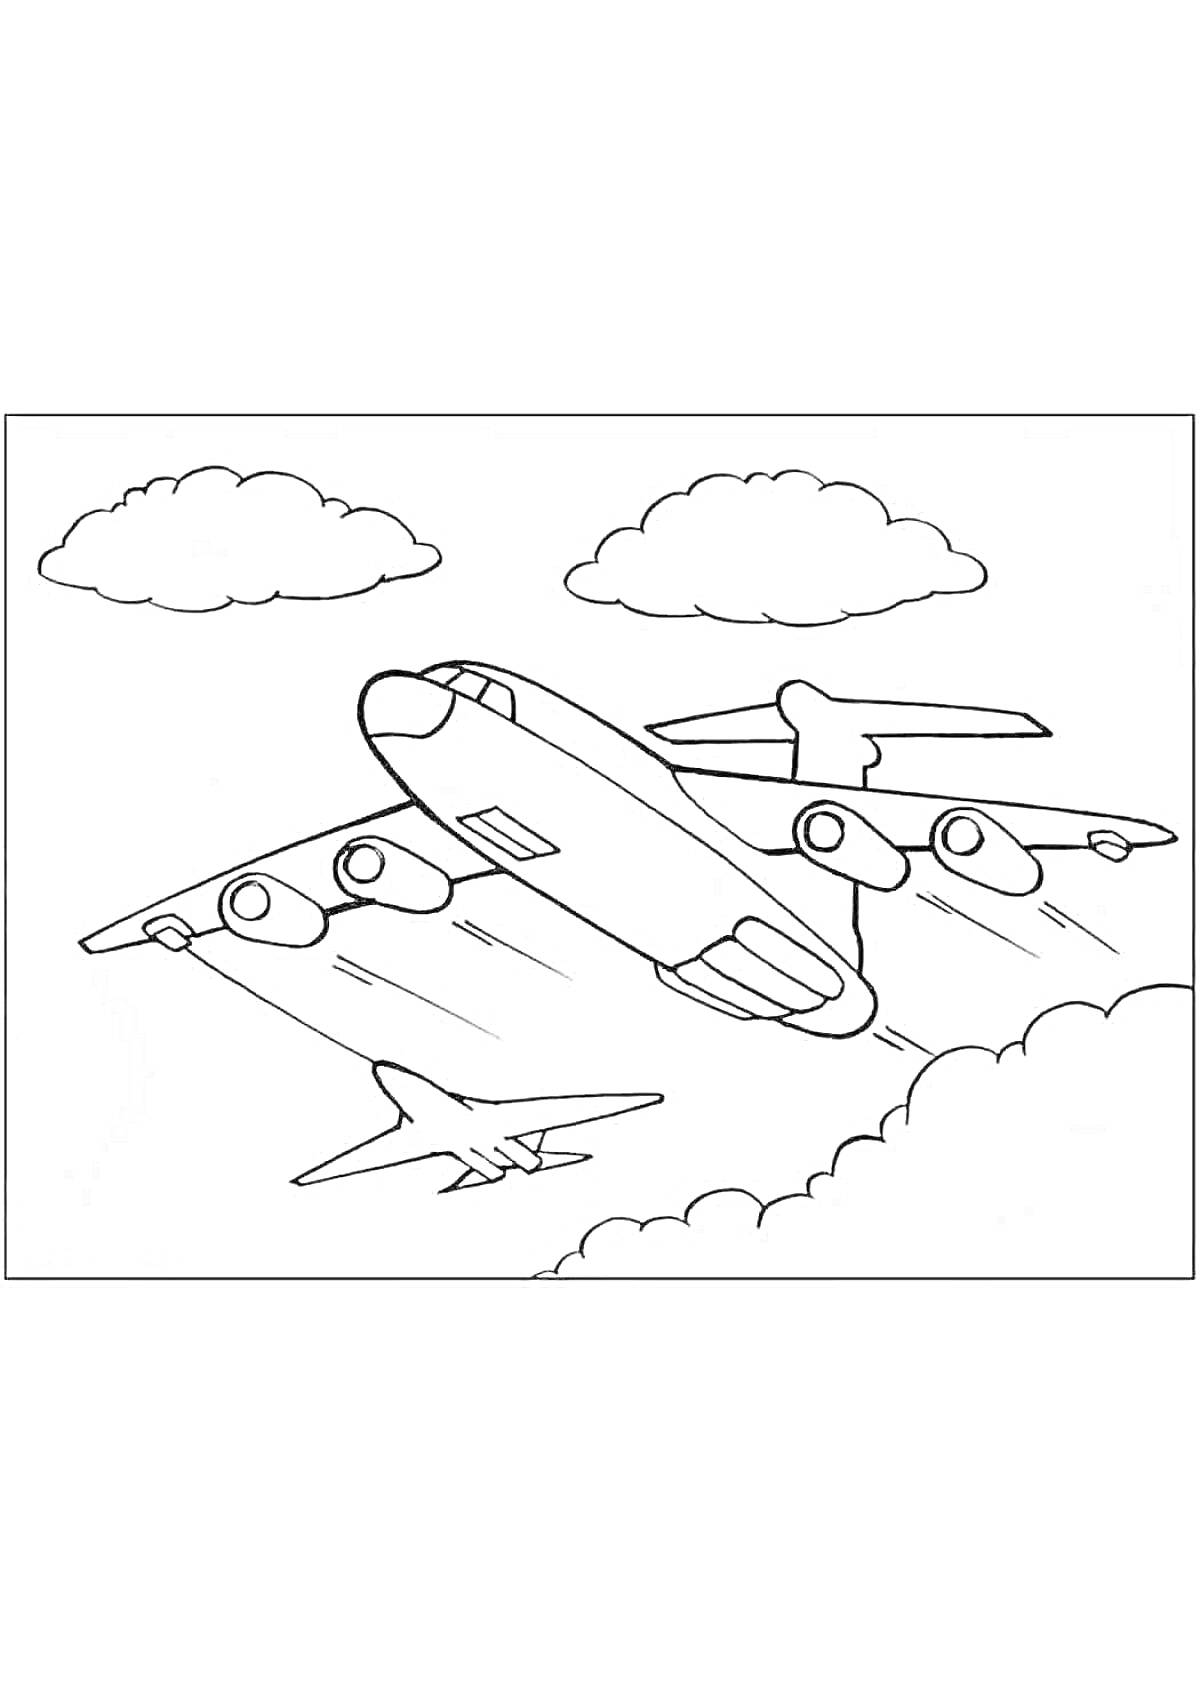 На раскраске изображено: Самолеты, Небо, Облака, Военная техника, Авиация